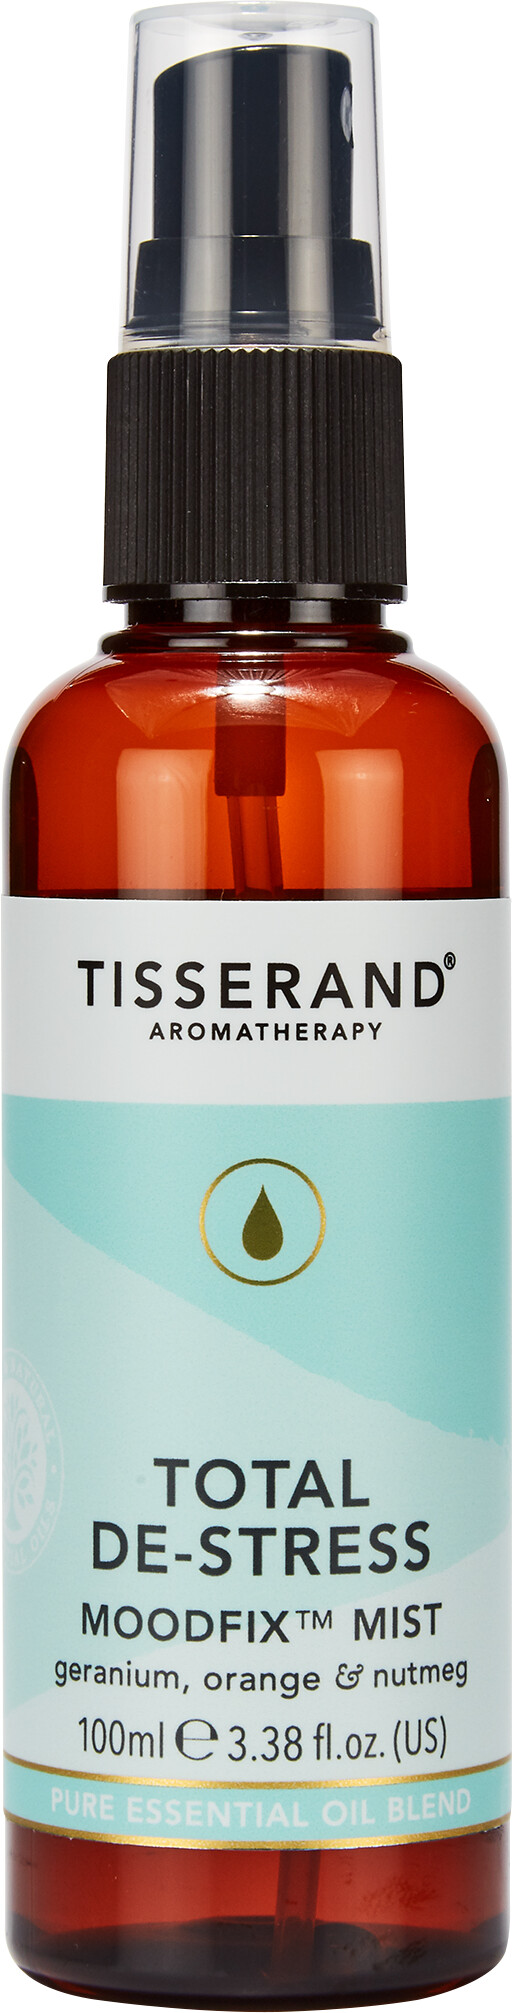 Tisserand Aromatherapy Total De-Stress MoodFix Mist 100ml